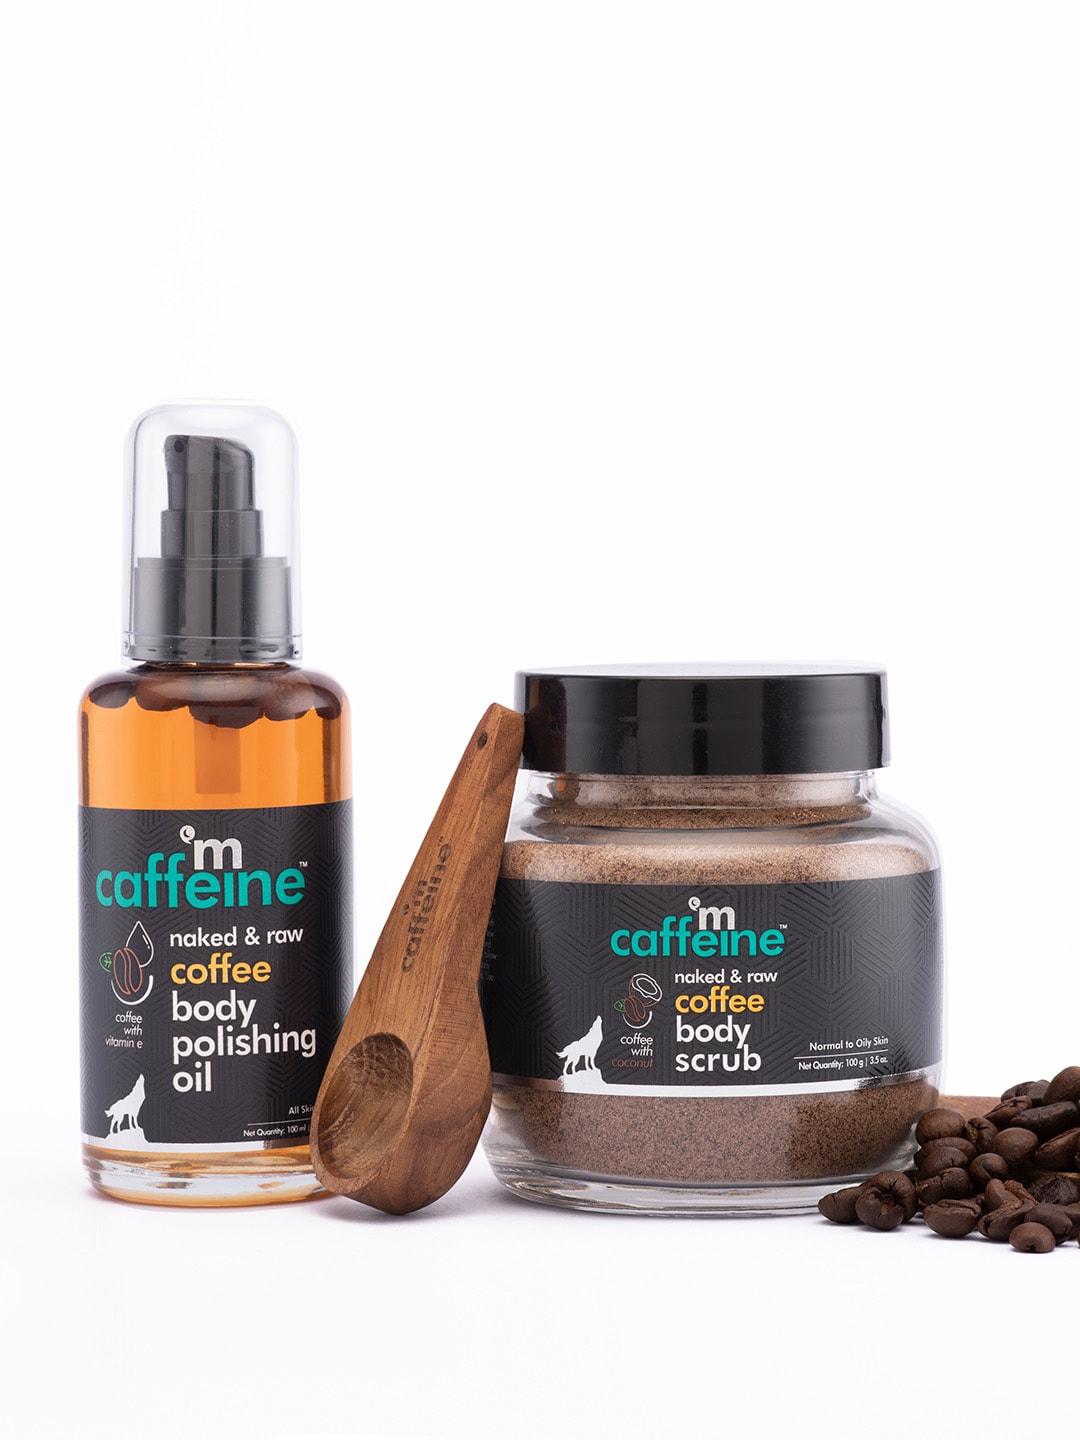 mcaffeine-exfoliating-coffee-body-scrub-&-relaxing-body-massage-oil-for-glowing-skin